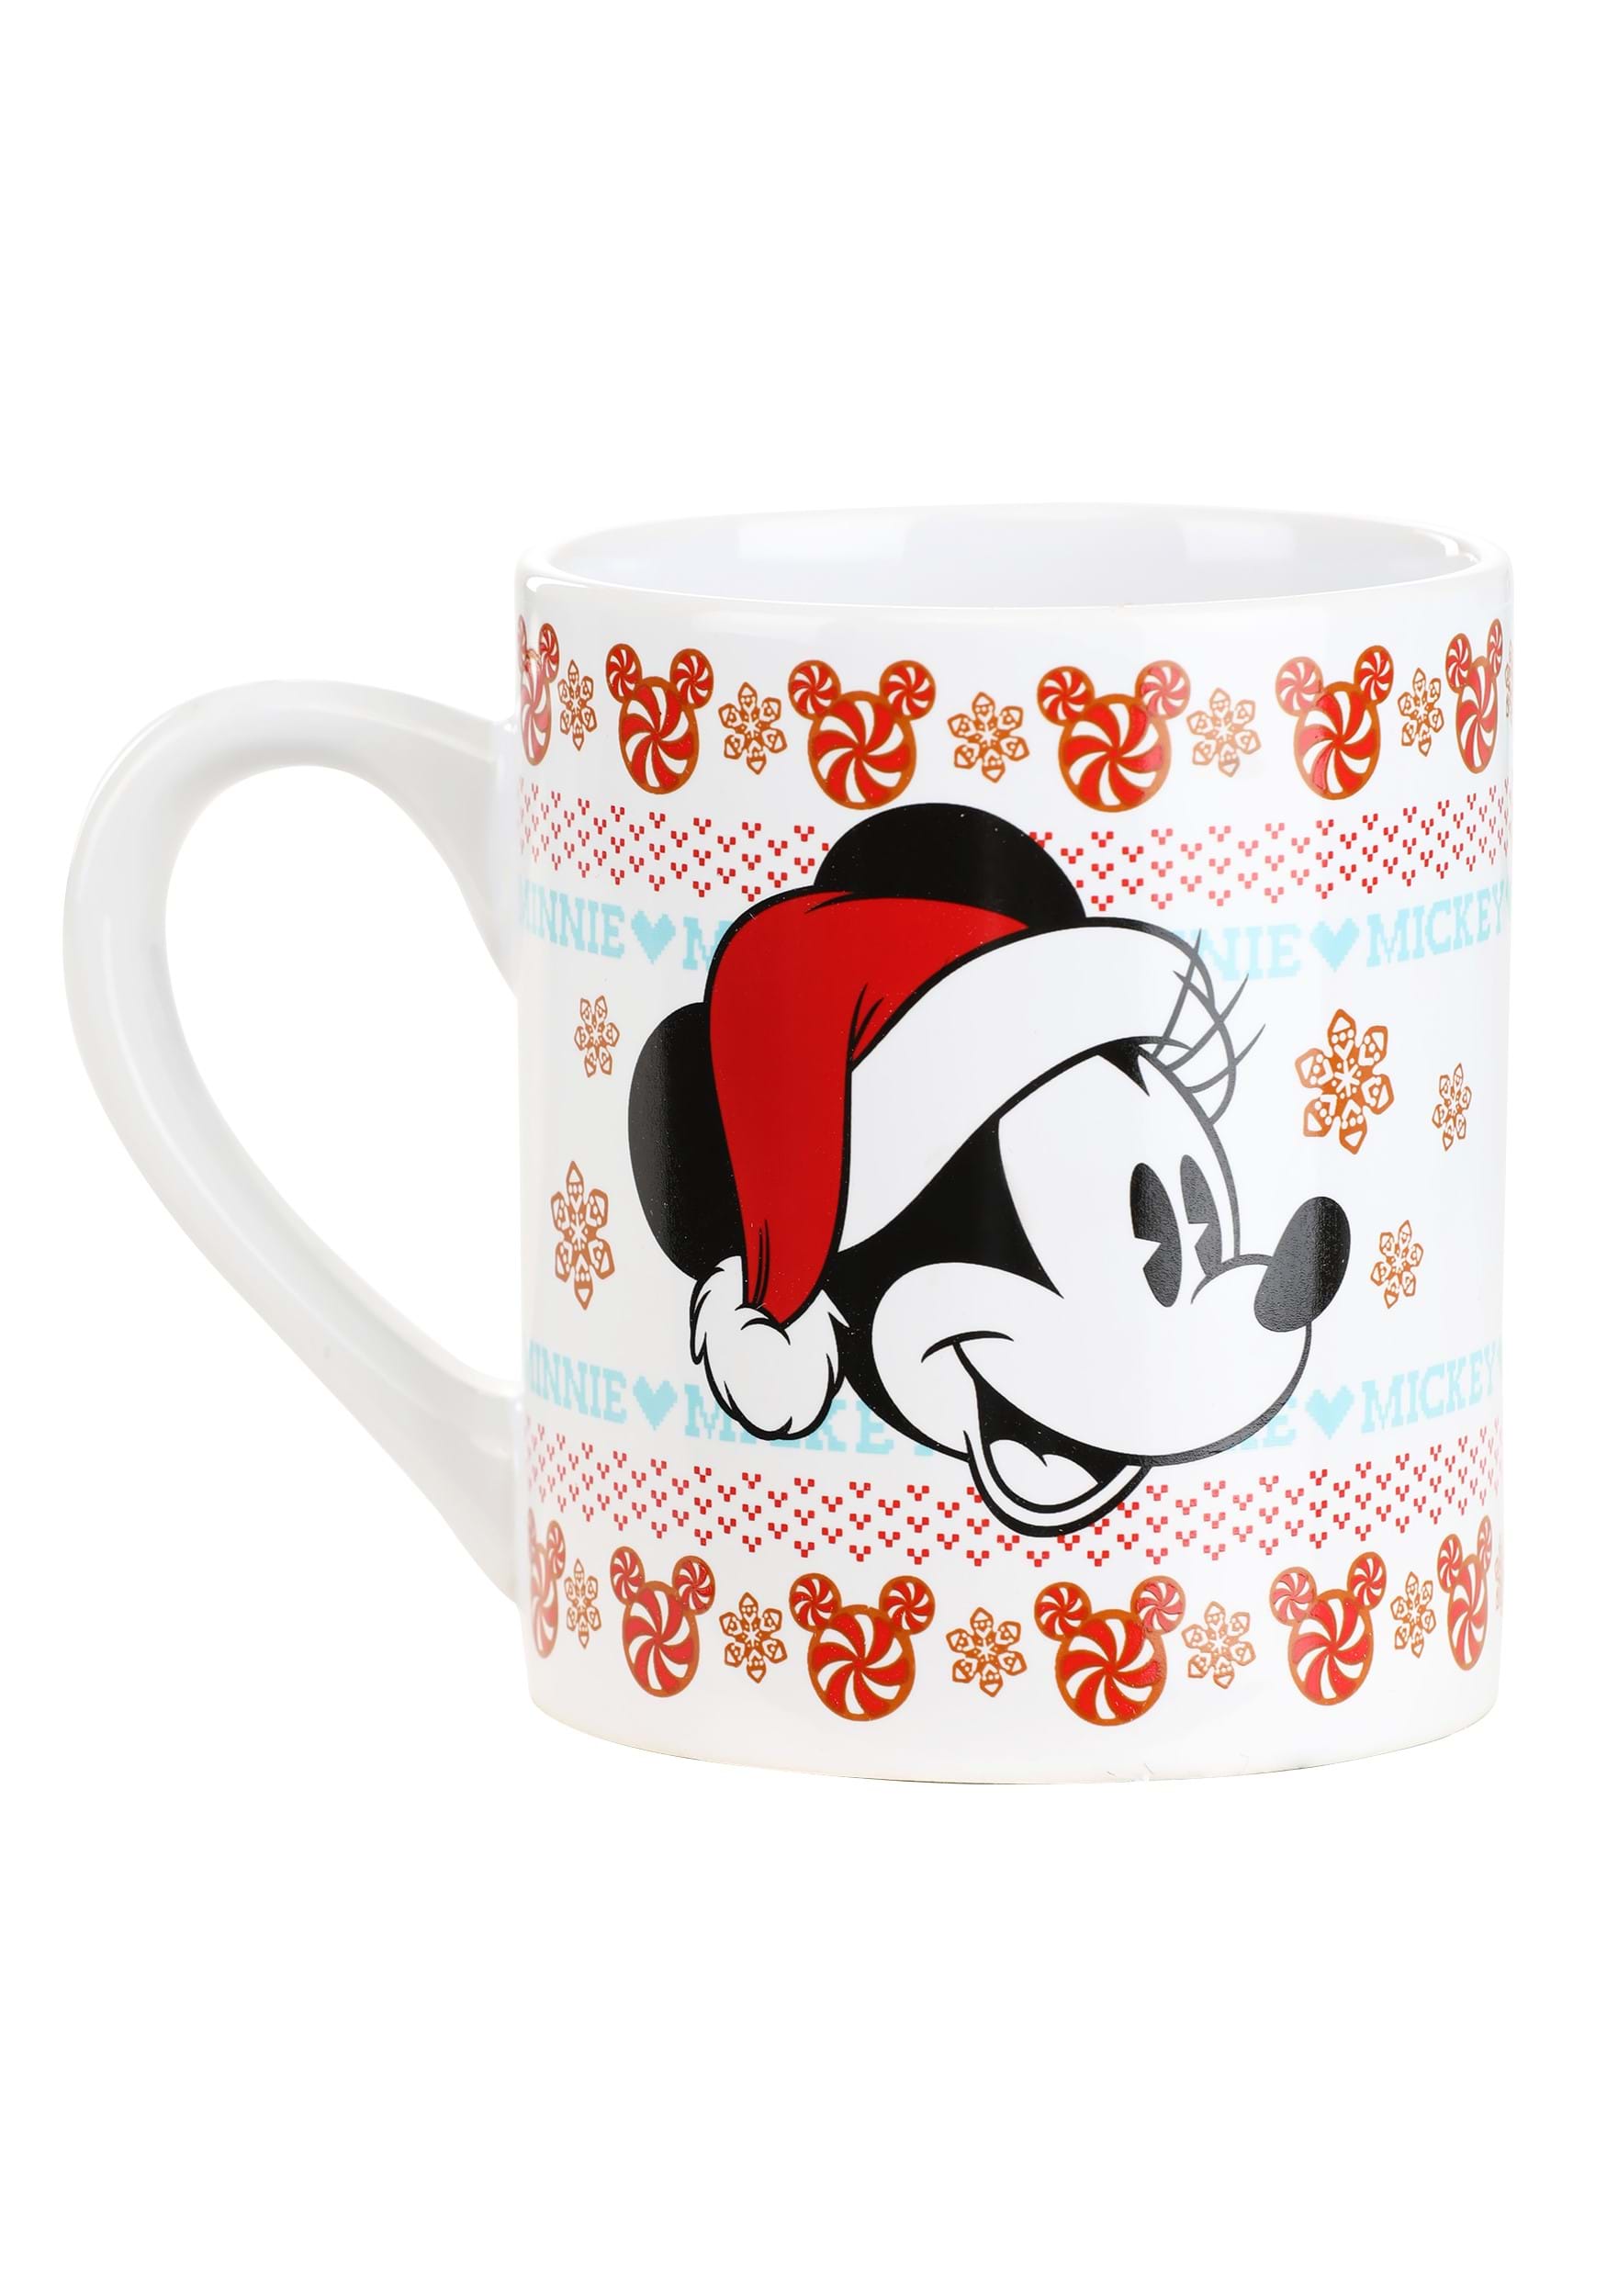 Mickey Mouse Christmas Mug, Hobby Lobby